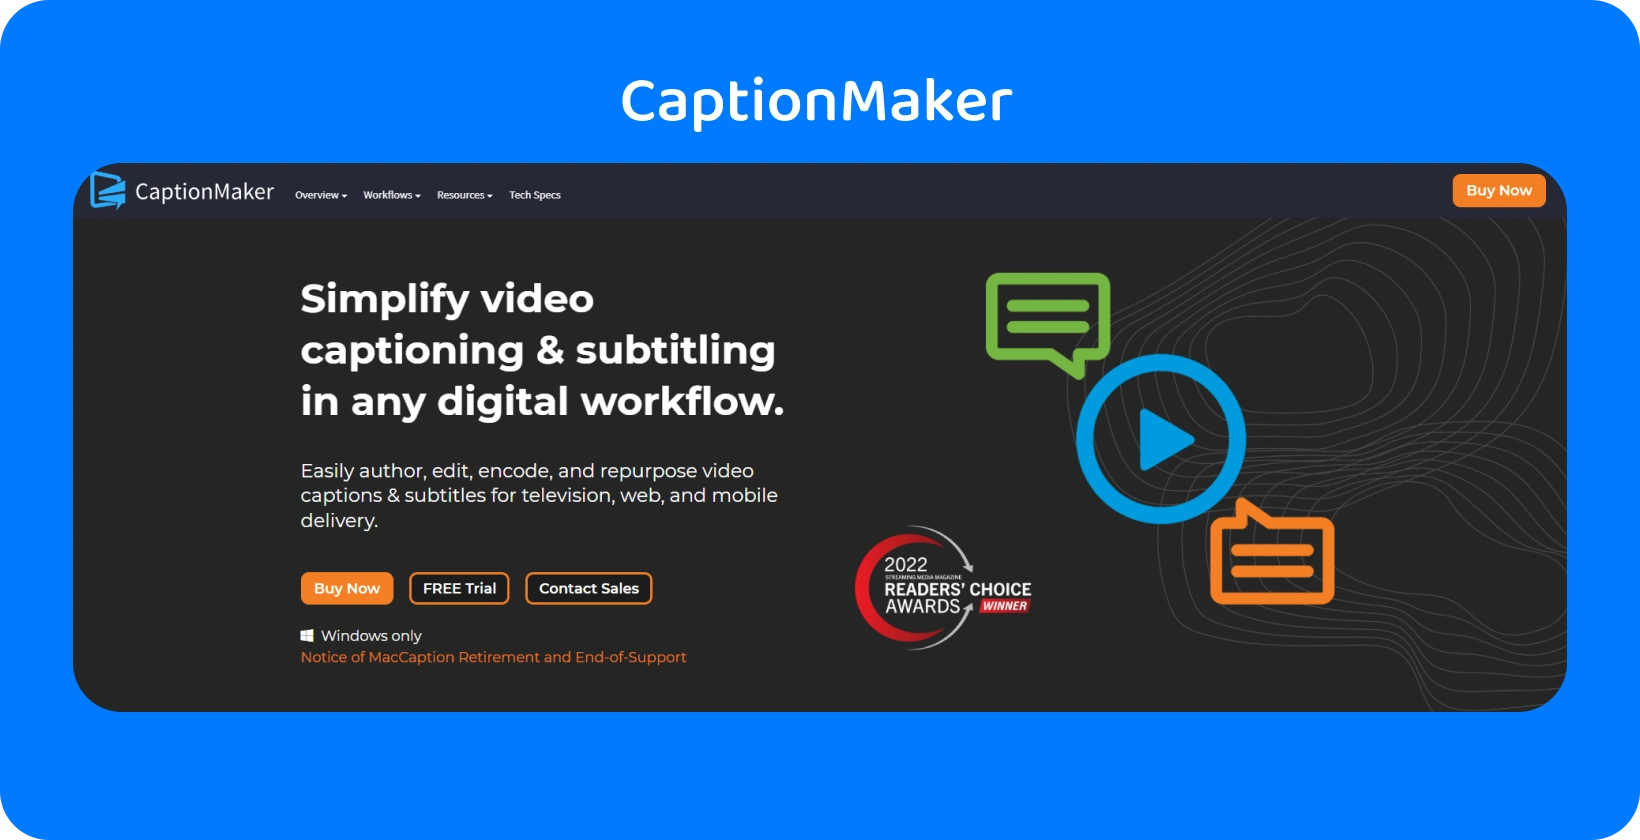 CaptionMaker antara muka untuk kapsyen video & subtitling memperkemas aliran kerja digital merentas peranti.